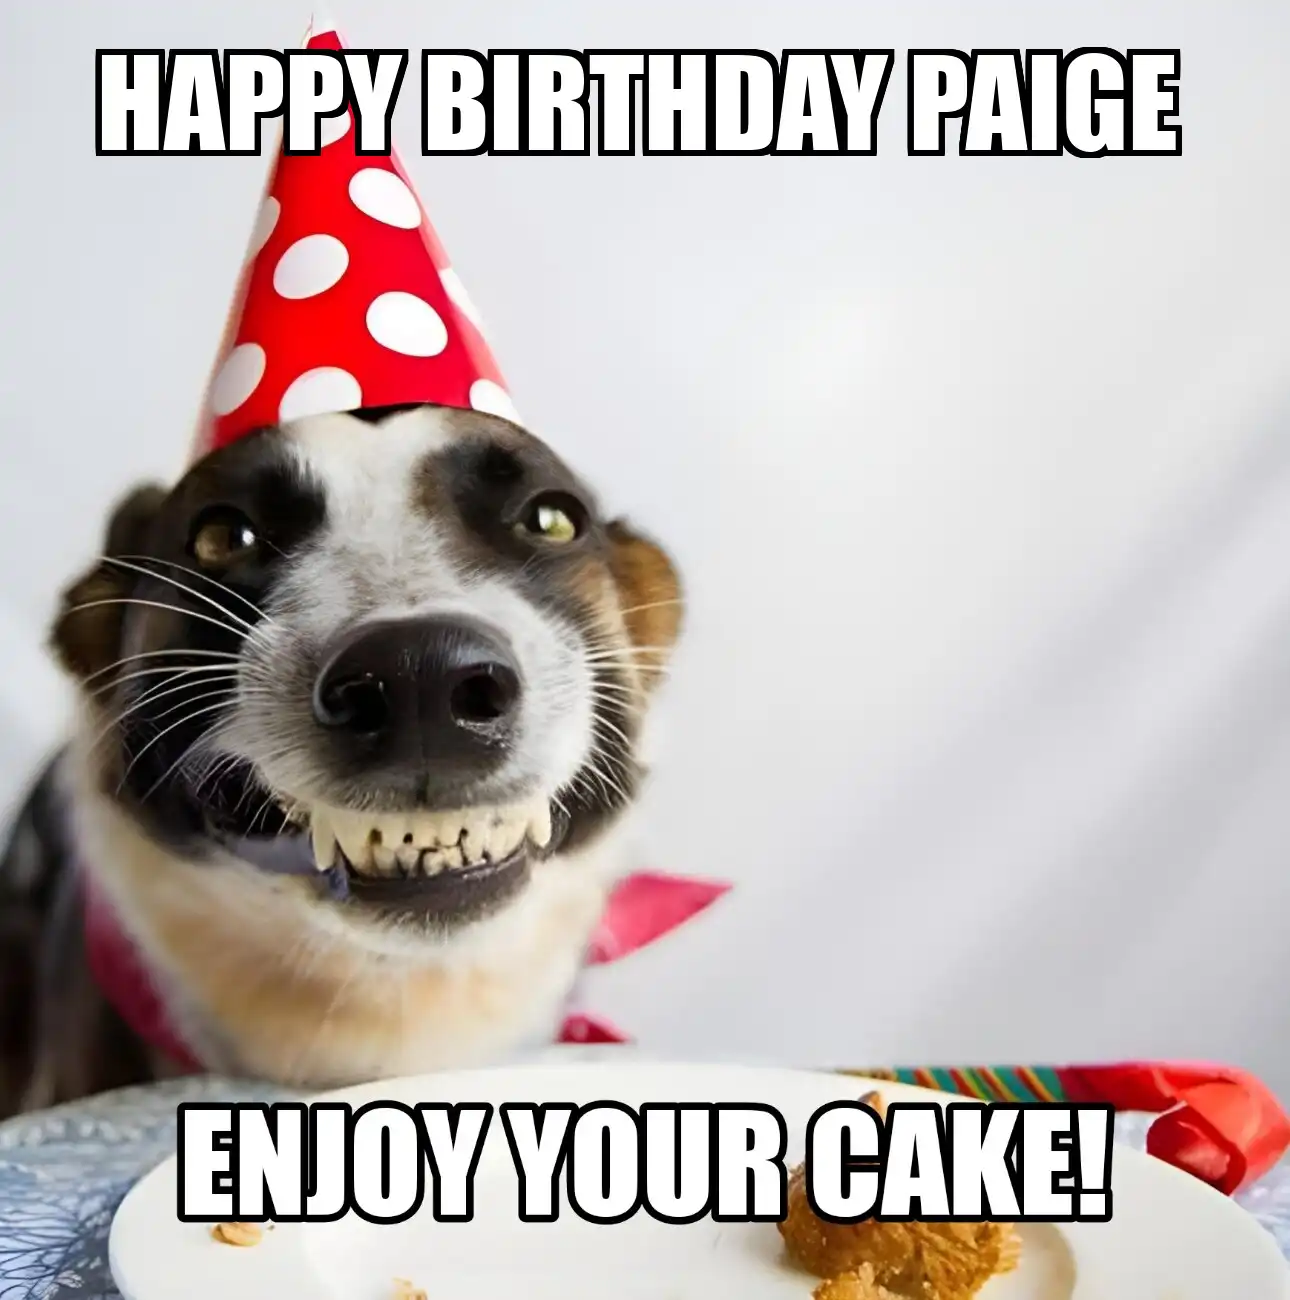 Happy Birthday Paige Enjoy Your Cake Dog Meme